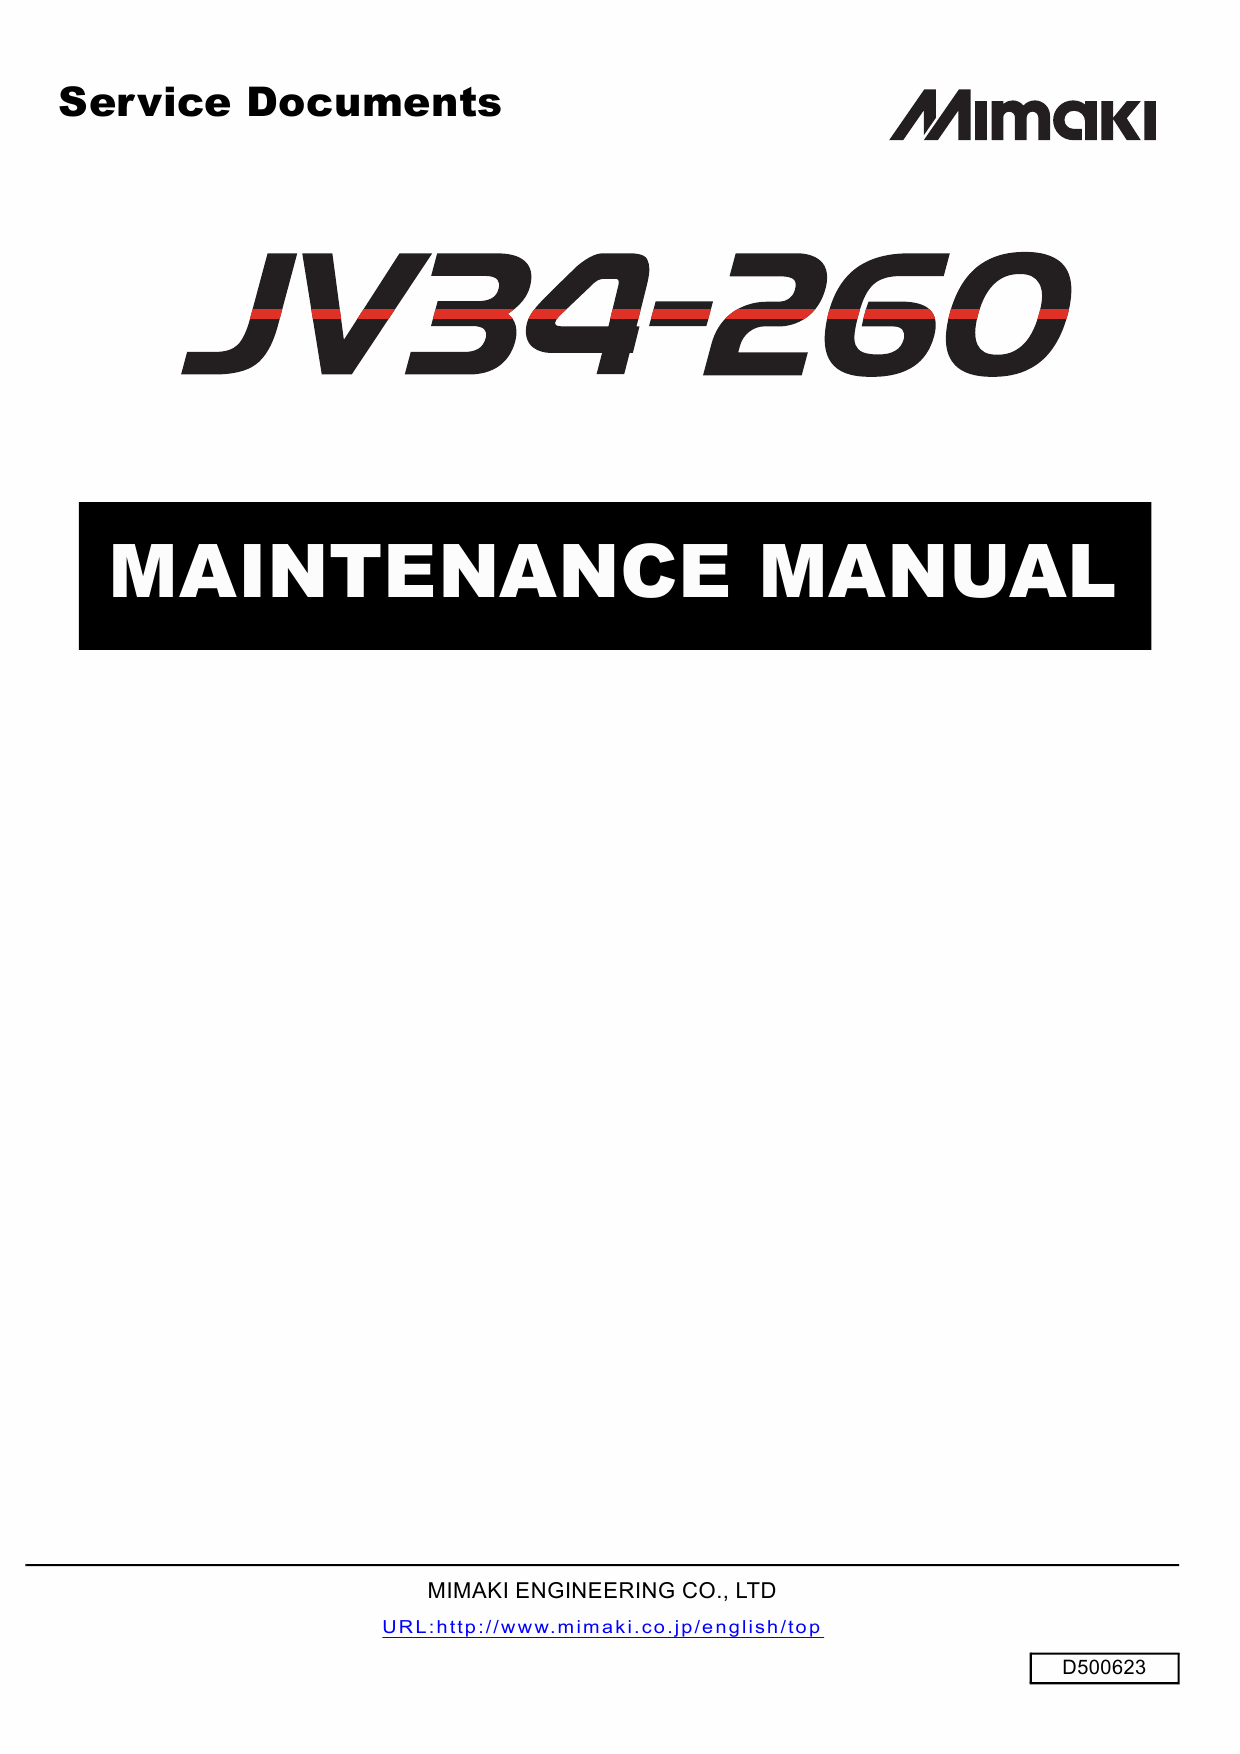 MIMAKI JV34 260 MAINTENANCE Service Manual-1